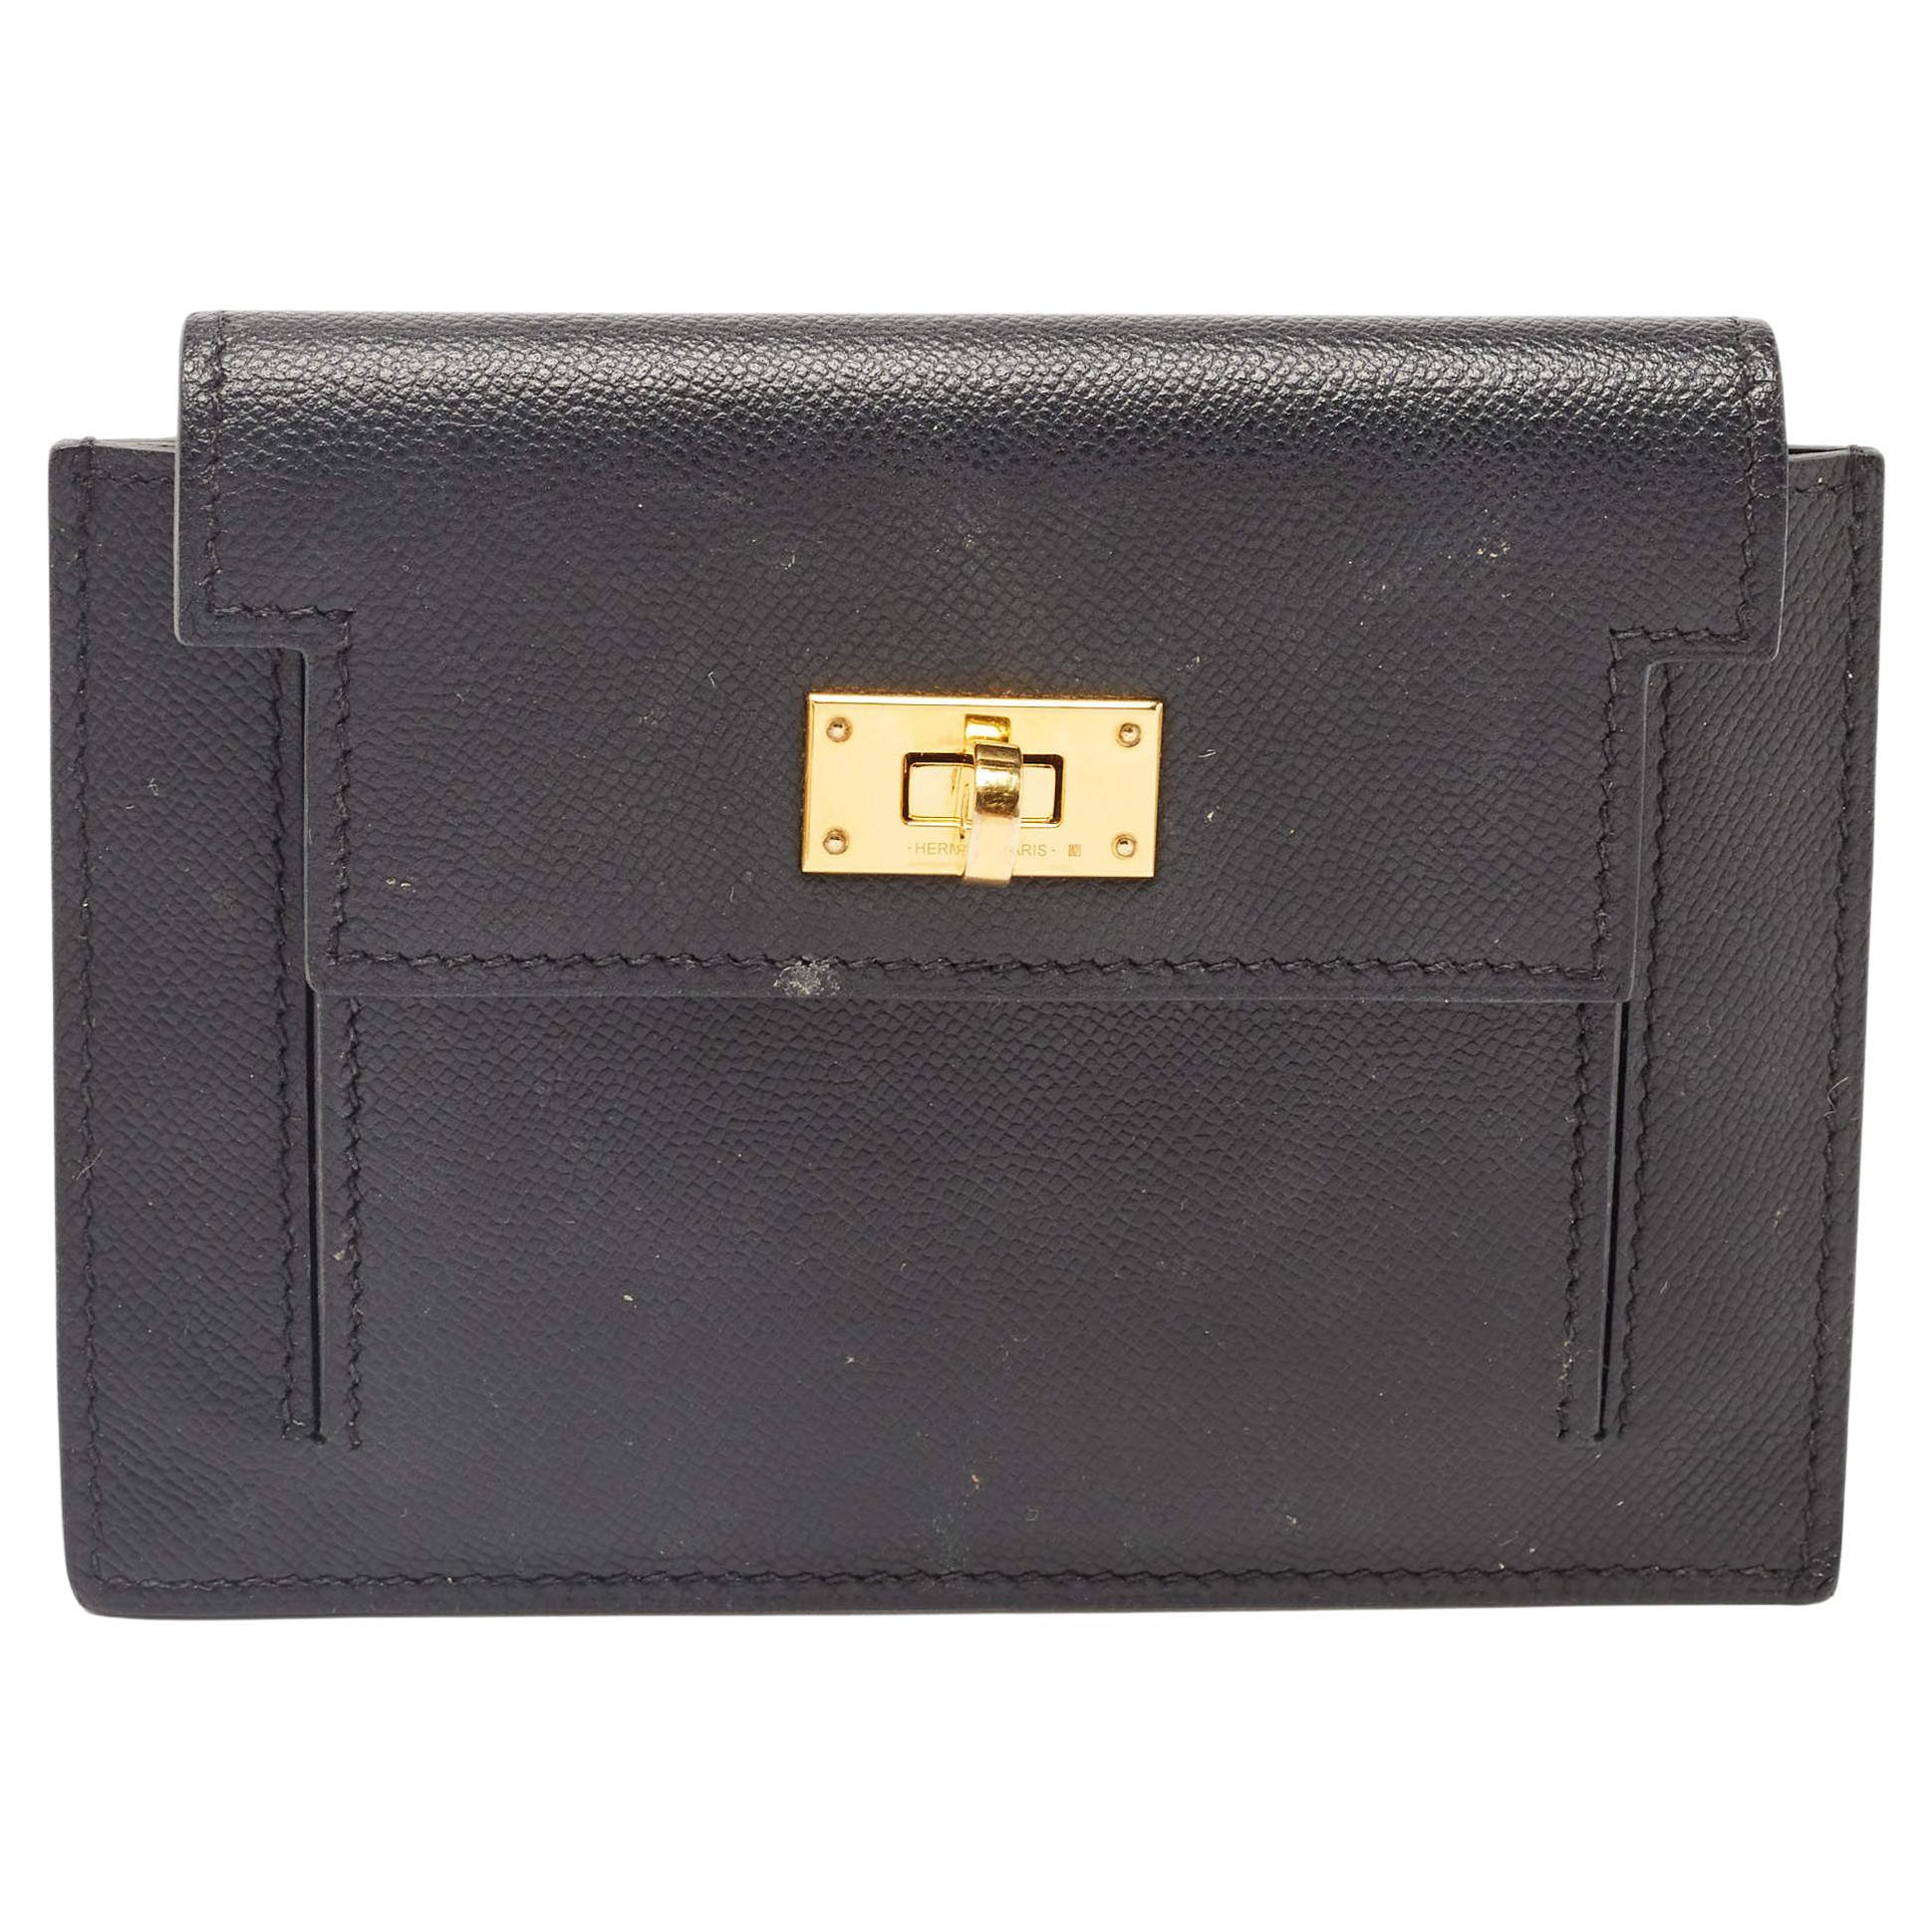 Hermes Black Epsom Leather Kelly Pocket Compact Wallet